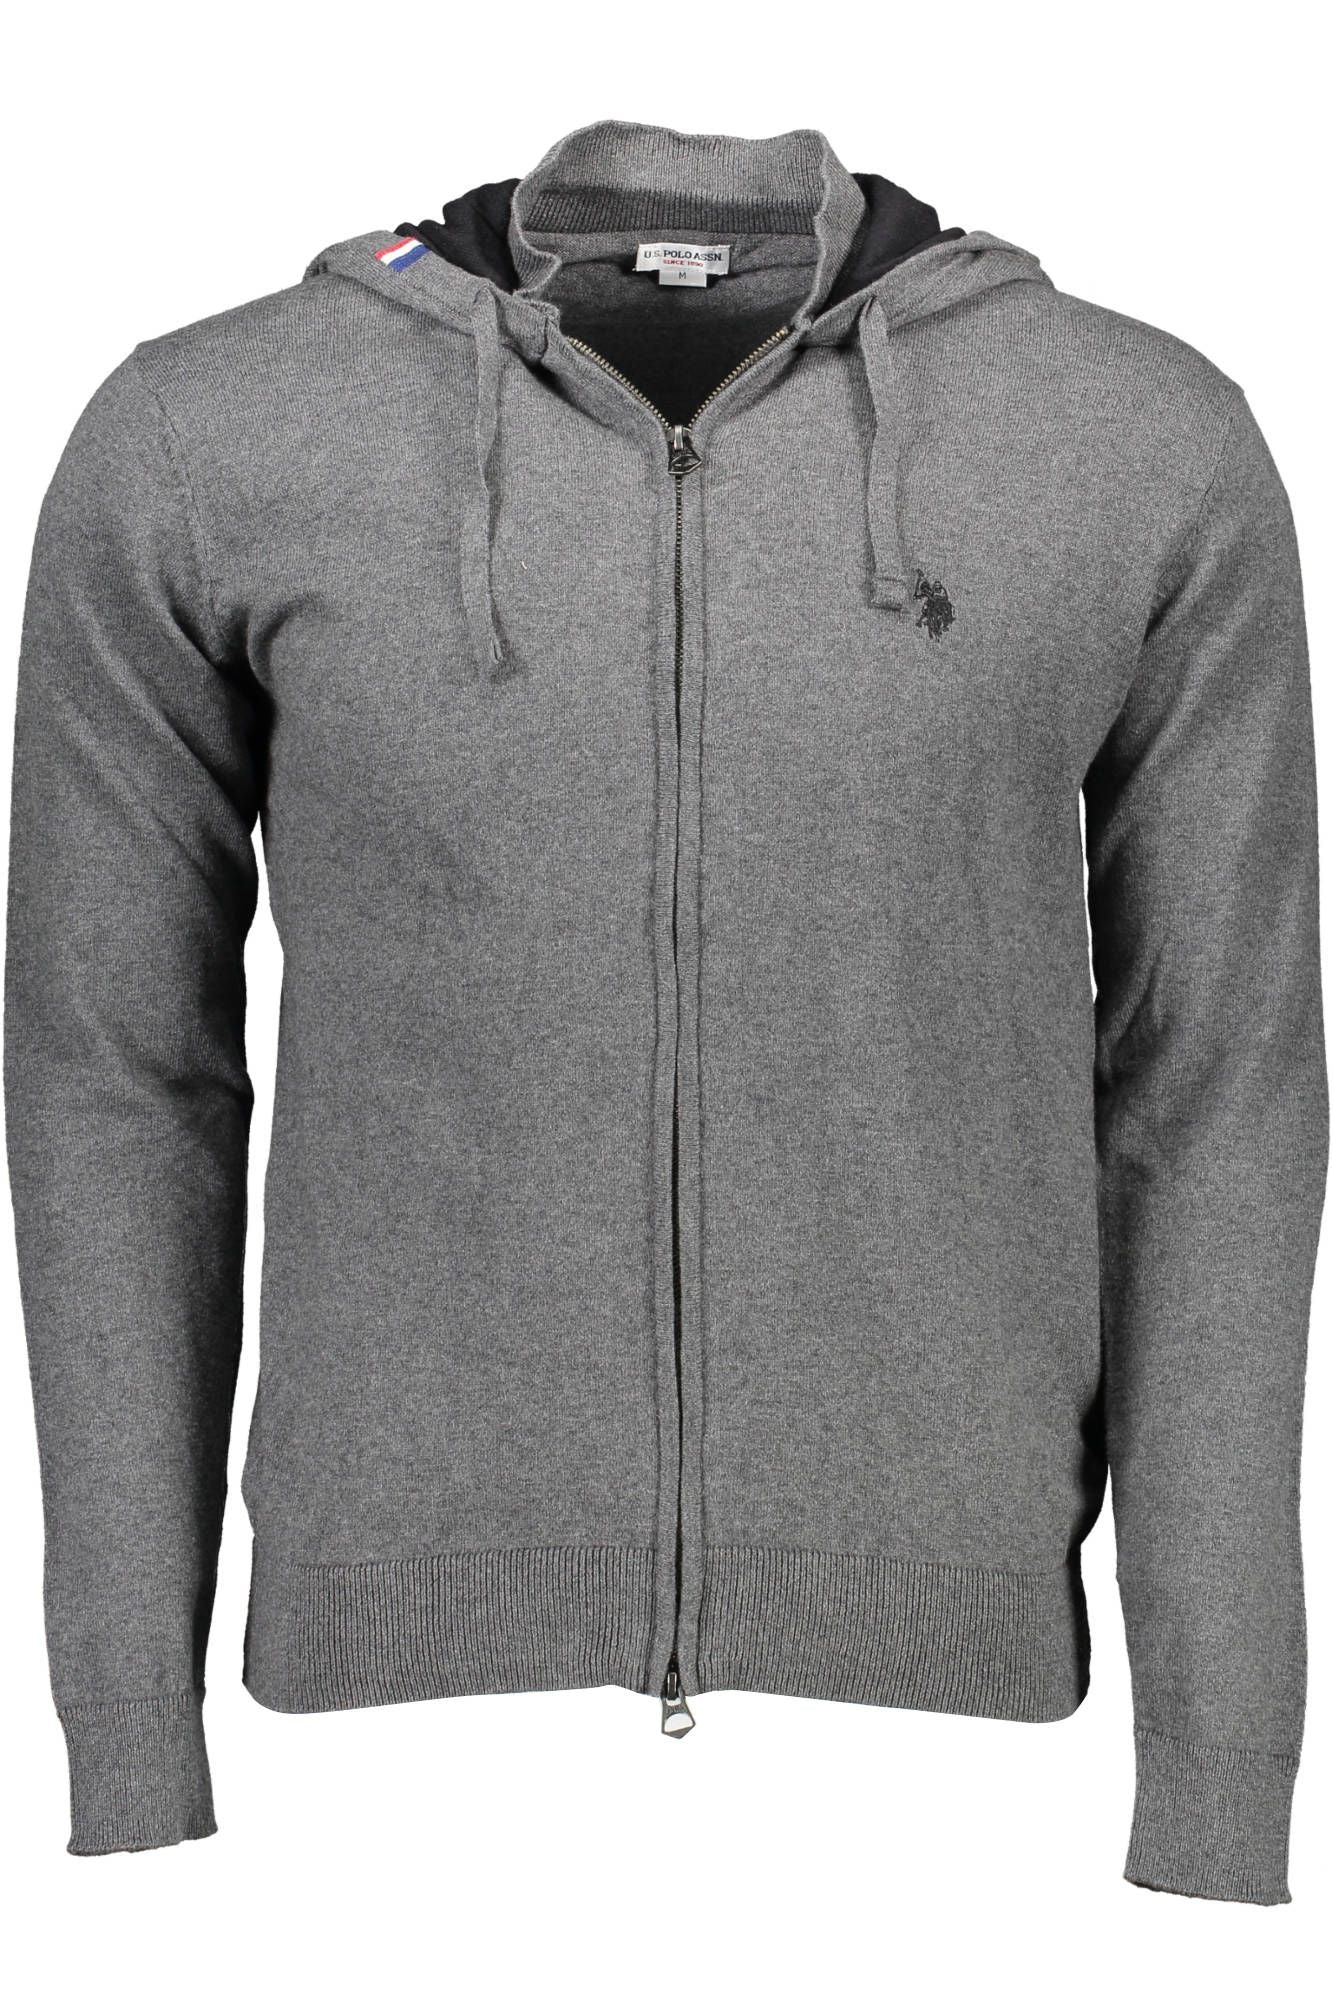 U.S. Polo Assn. Gray Cotton Sweater